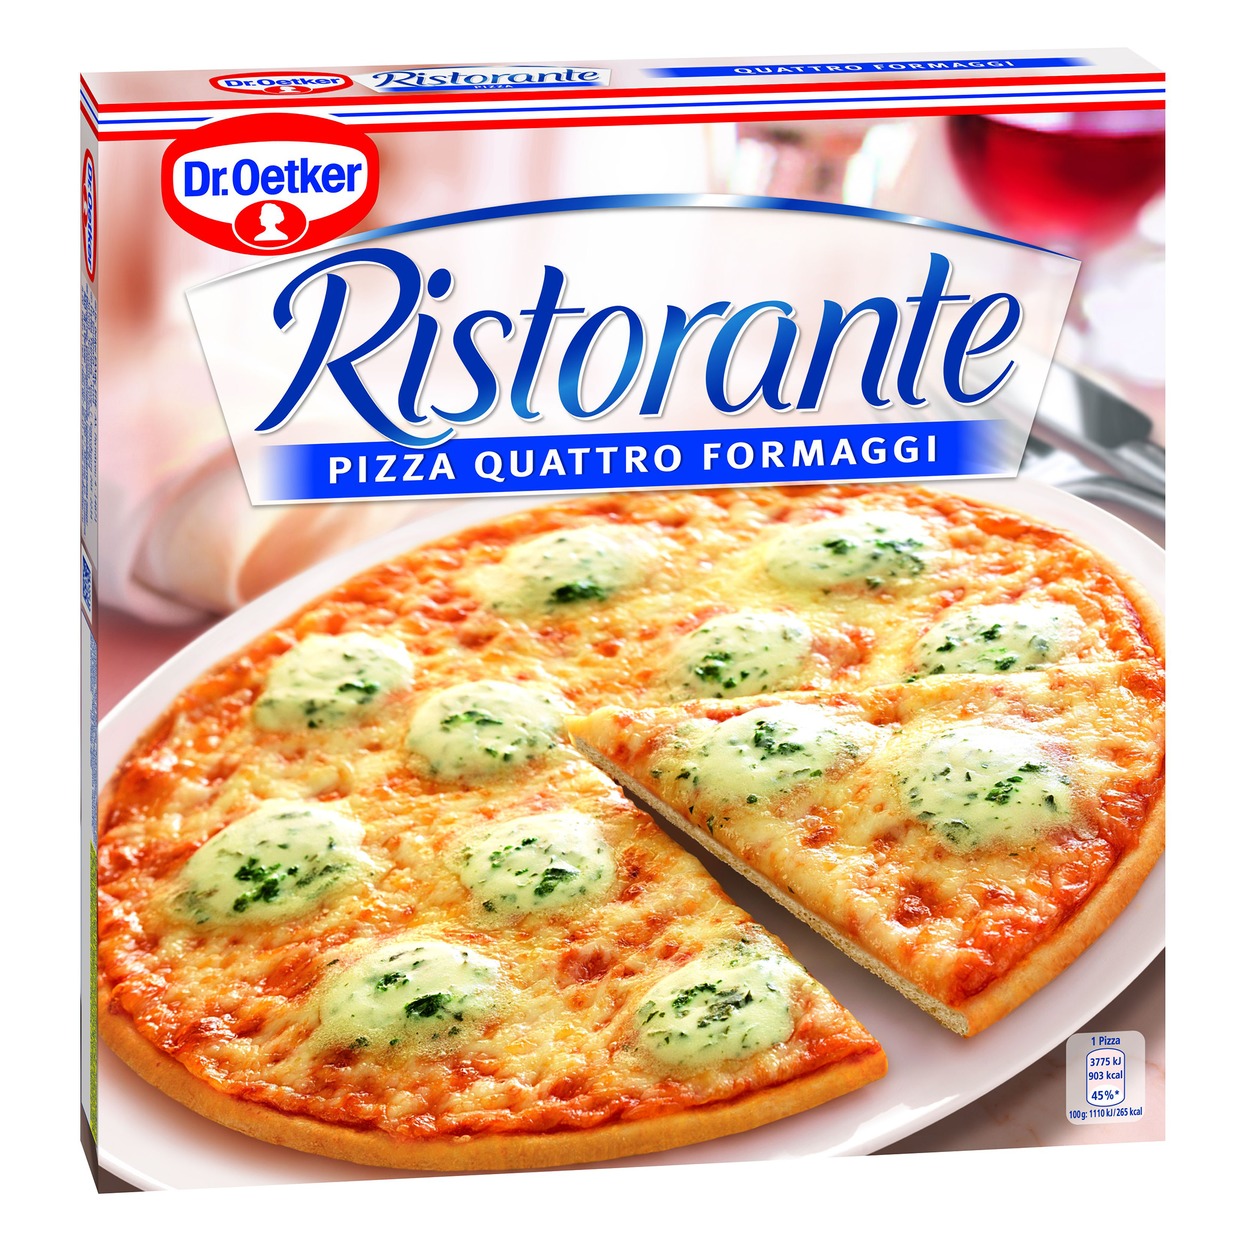 Пицца Ristorante 4 сыра; Speciale, Dr. Oetker, 330 -340 г